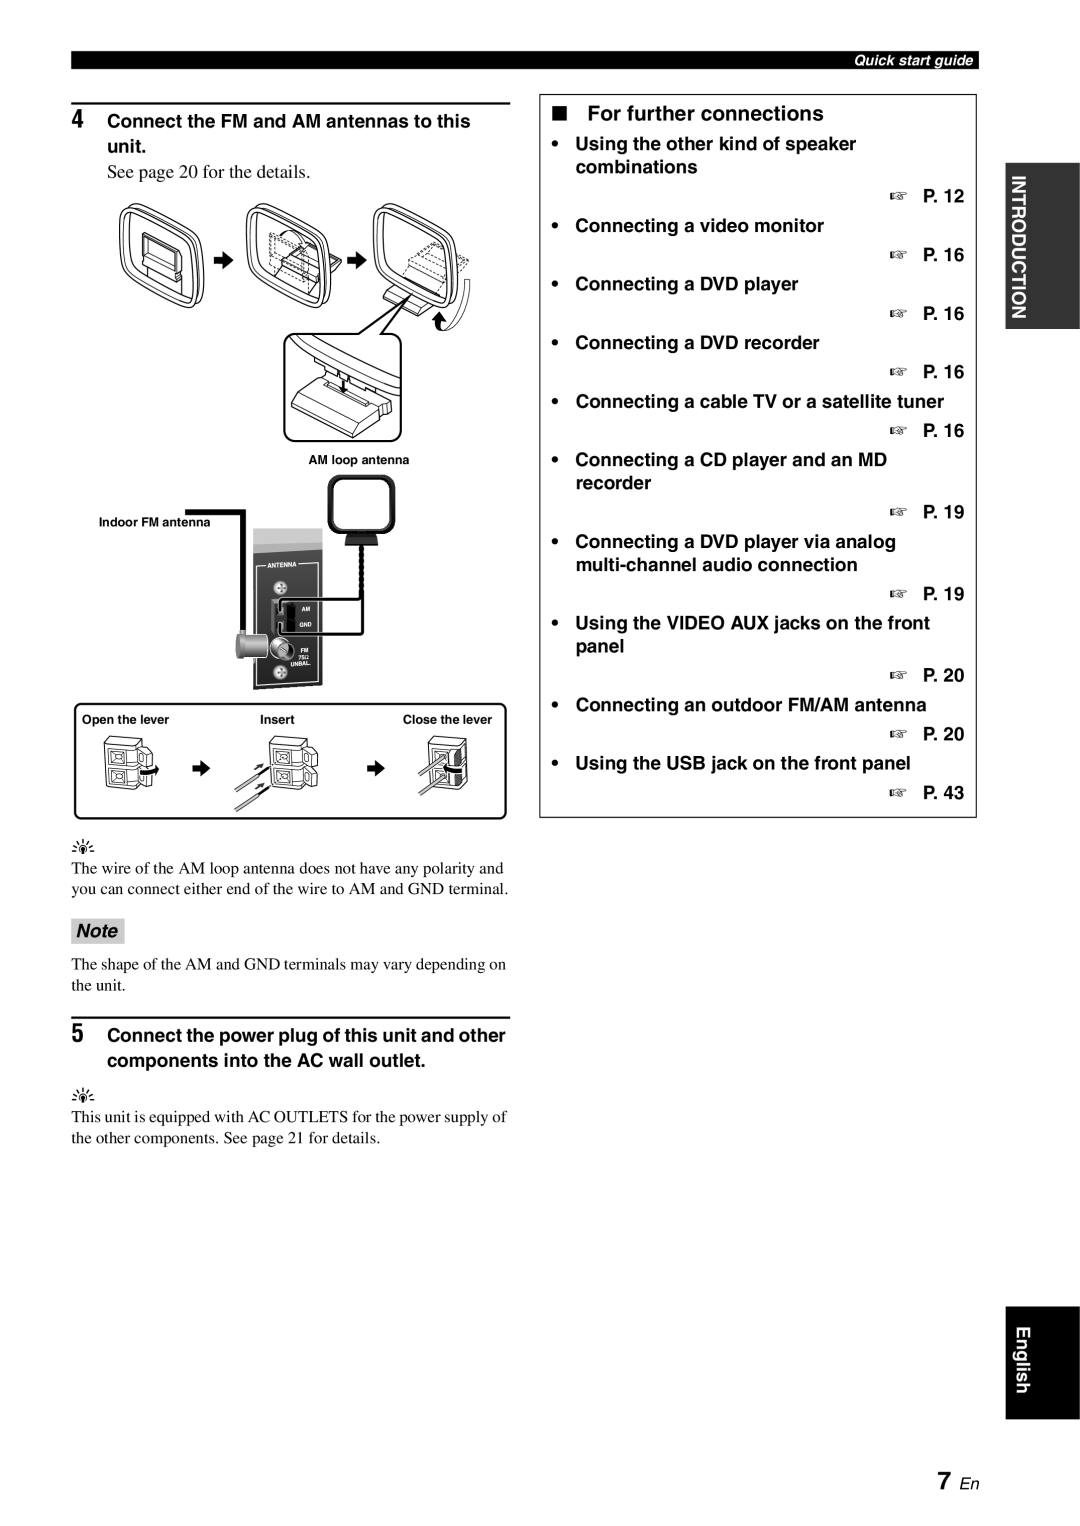 Yamaha RX-V561 owner manual 7 En, For further connections 